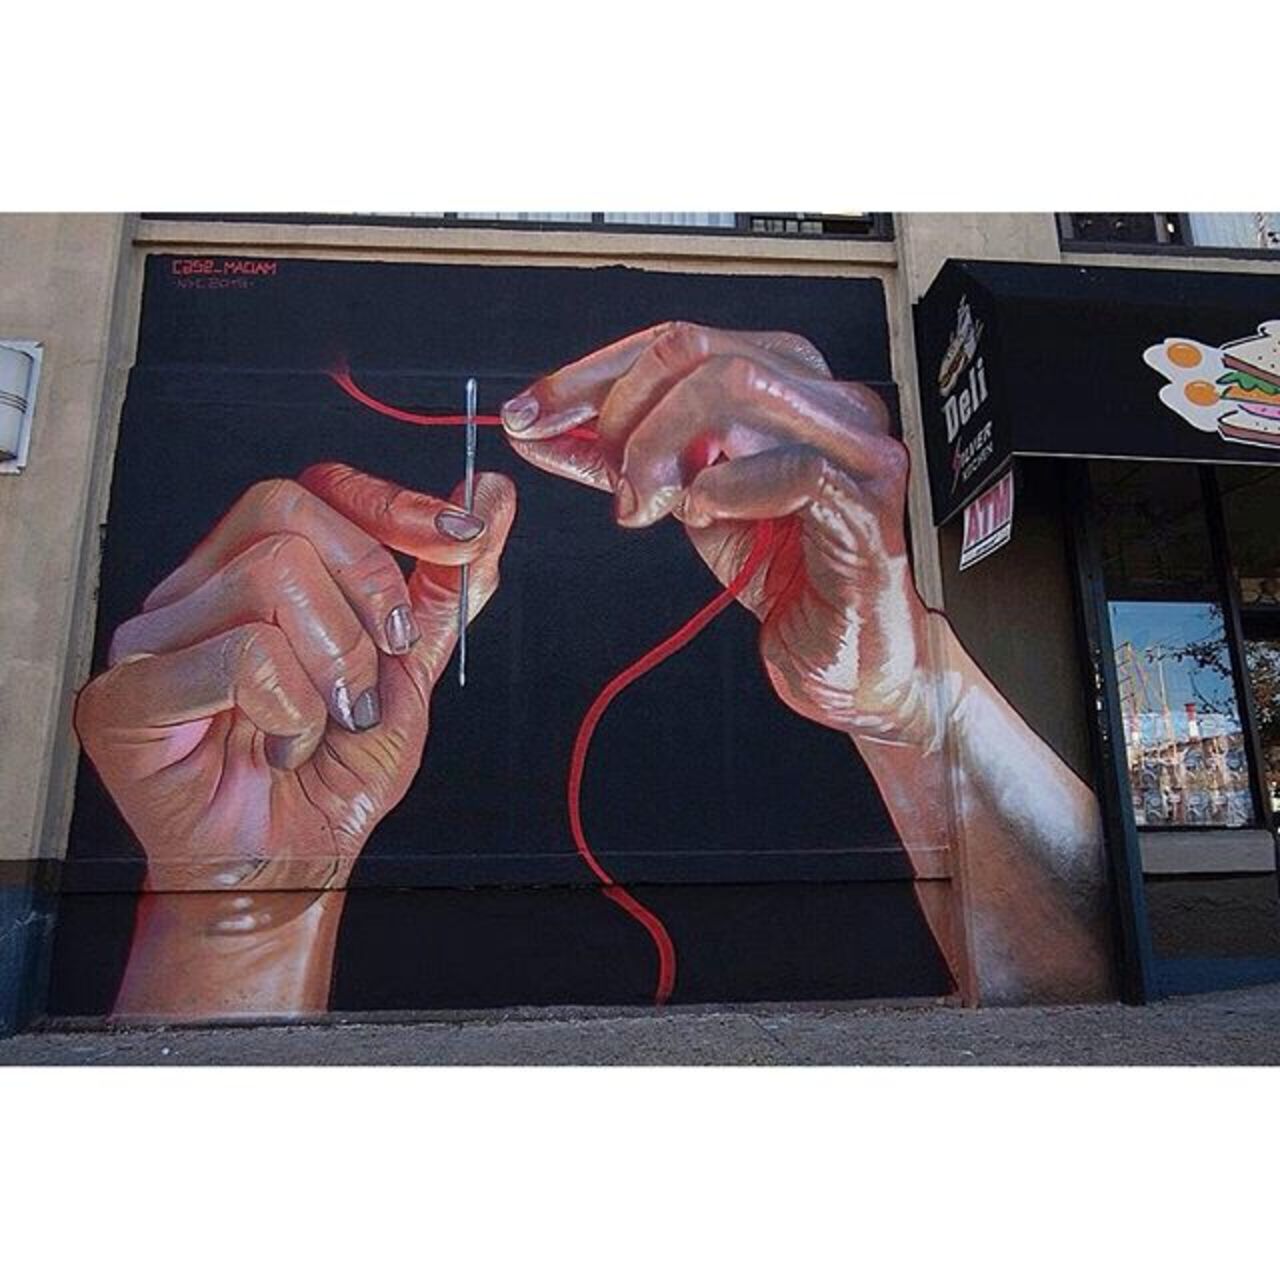 RT @cakozlem76: Case #streetart #urbanart #graffiti https://t.co/brjk6HQi9S